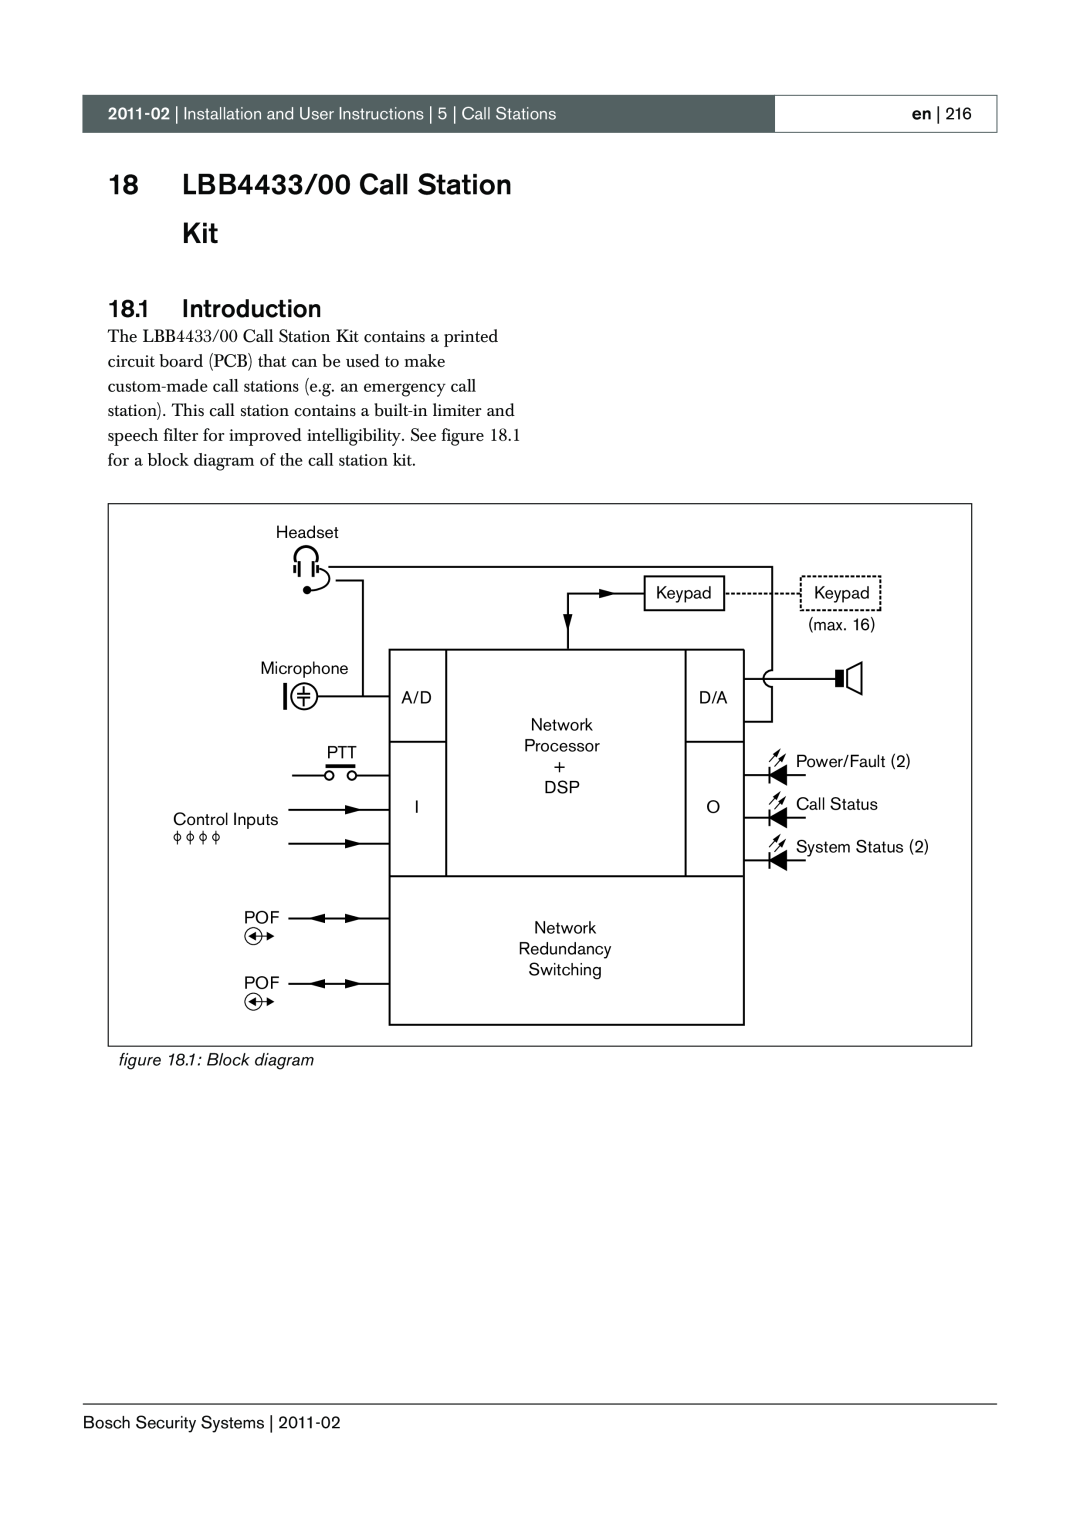 Bosch Appliances 3.5 manual 18LBB4433/00 Call Station Kit, 18.1Introduction, 1: Block diagram 